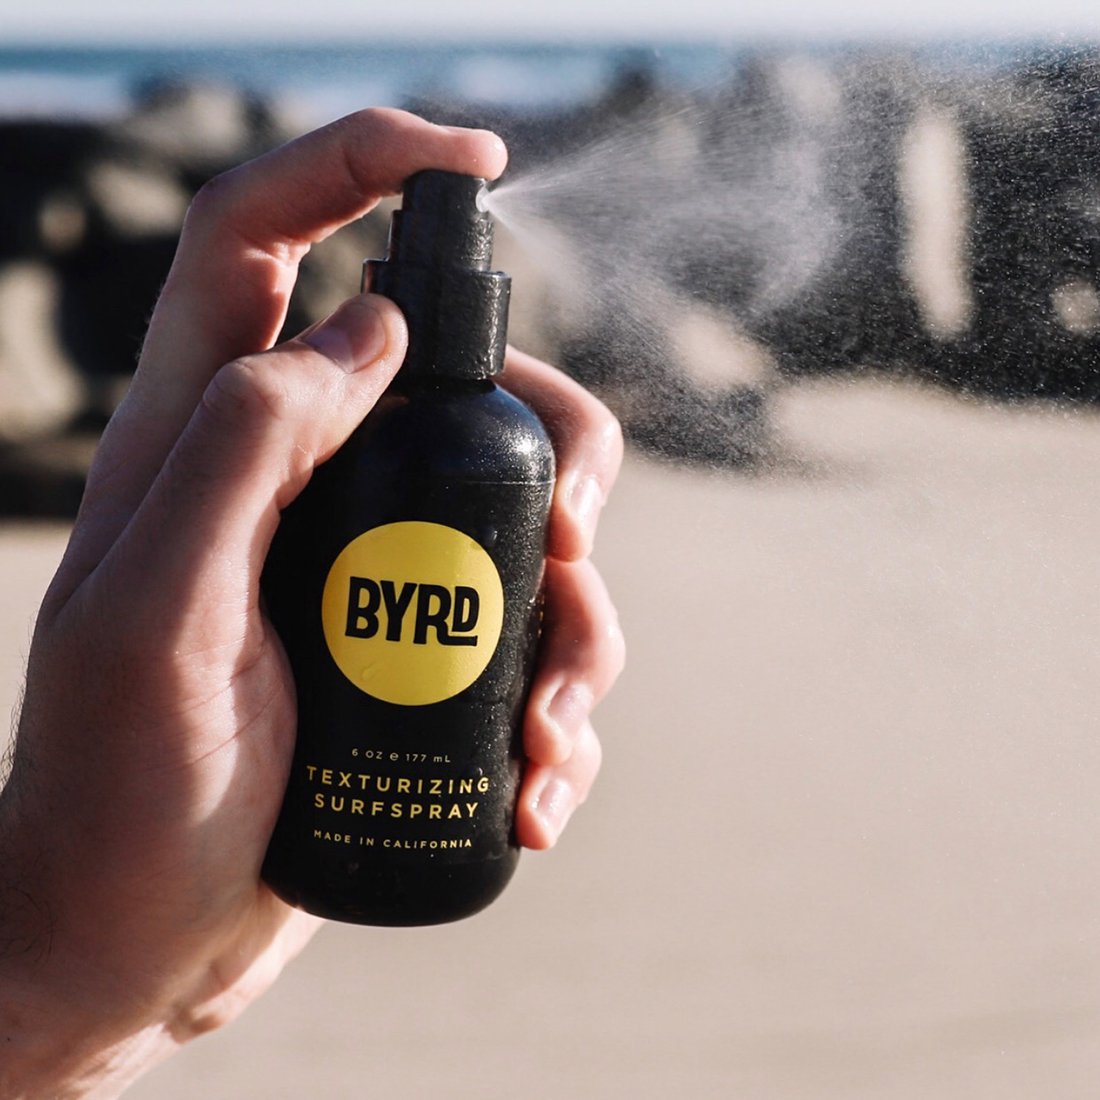 Byrd Texturizing Surfspray - 6 oz bottle